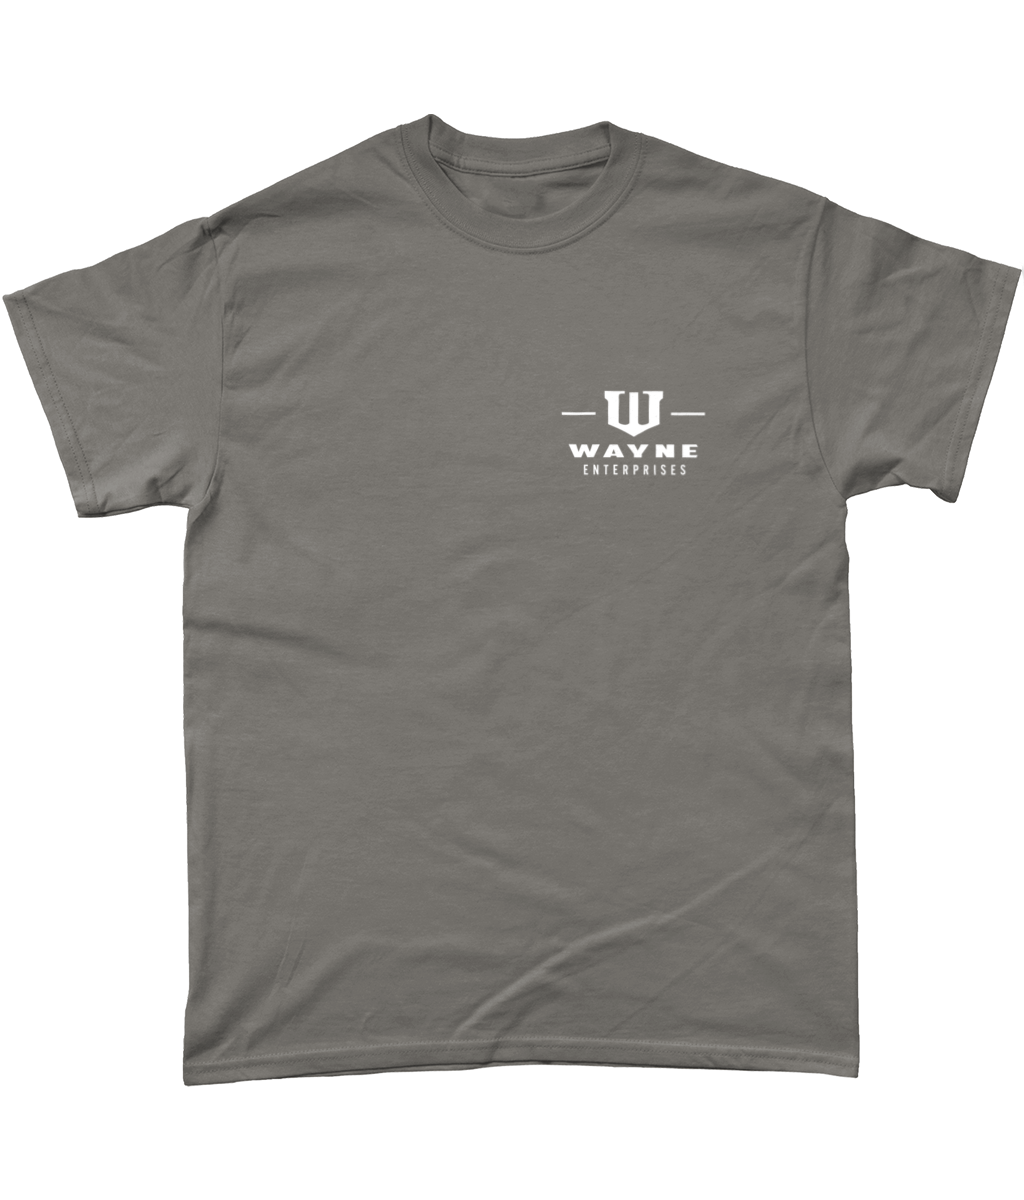 Wayne Enterprises: T-Shirt